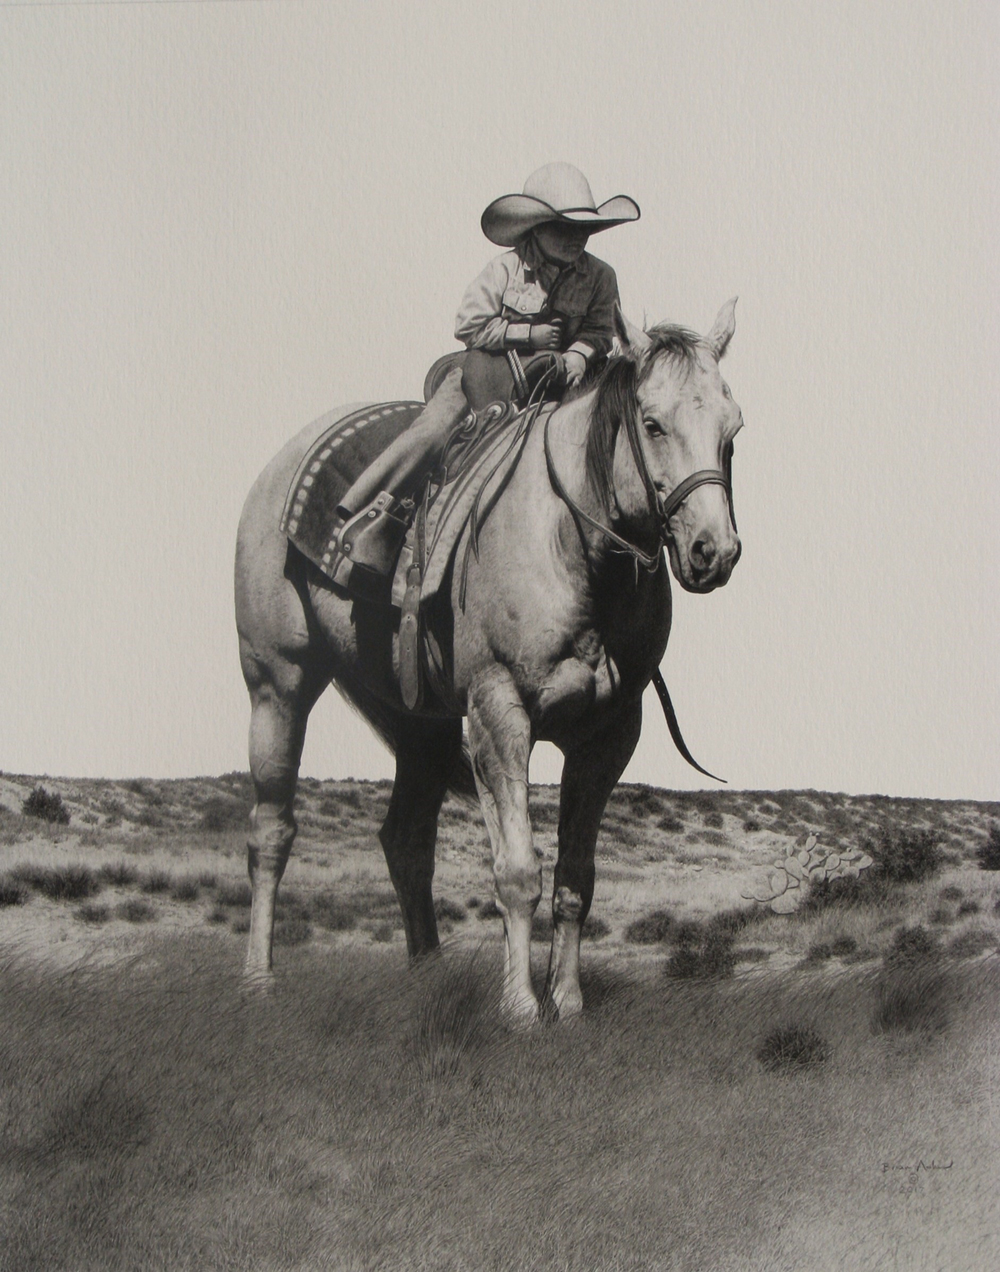 Littlest Cowboy by Brian Asher